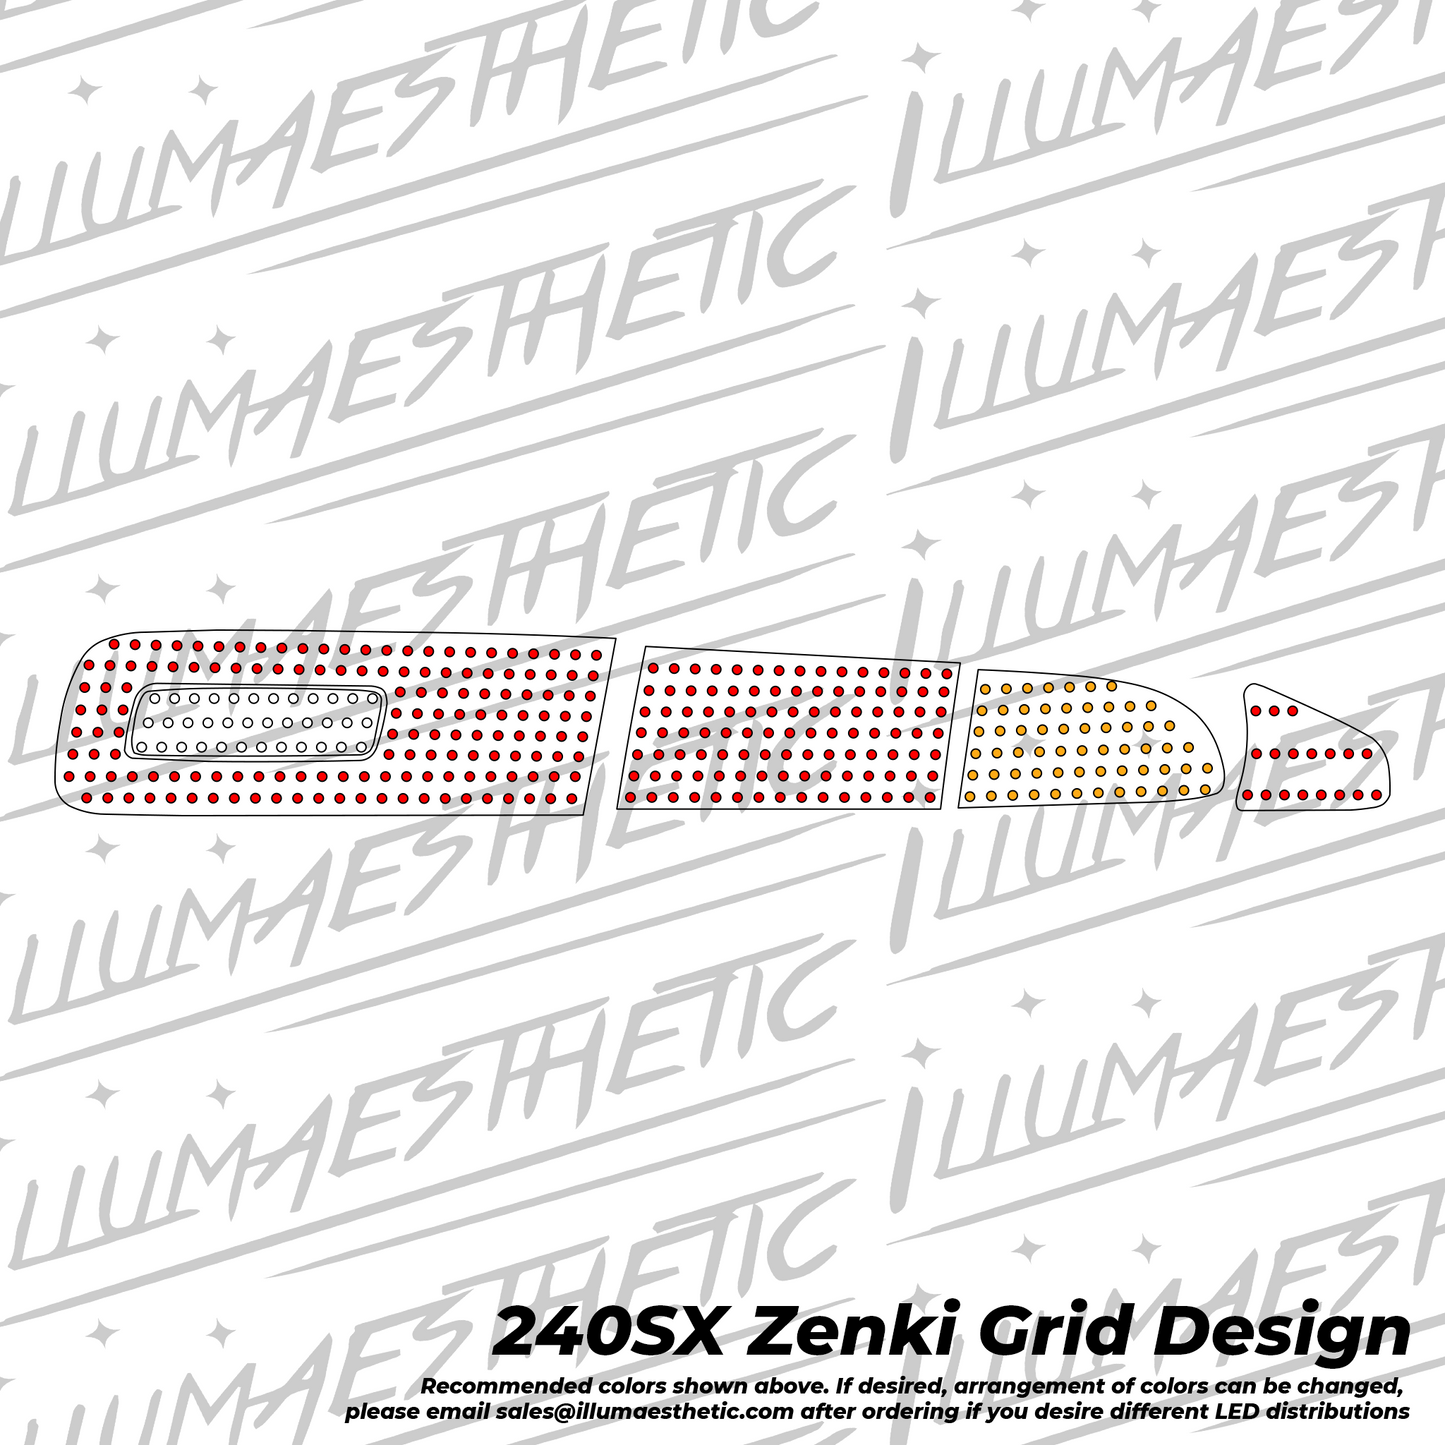 Nissan 240SX (S14, Zenki) - Complete DIY Kit